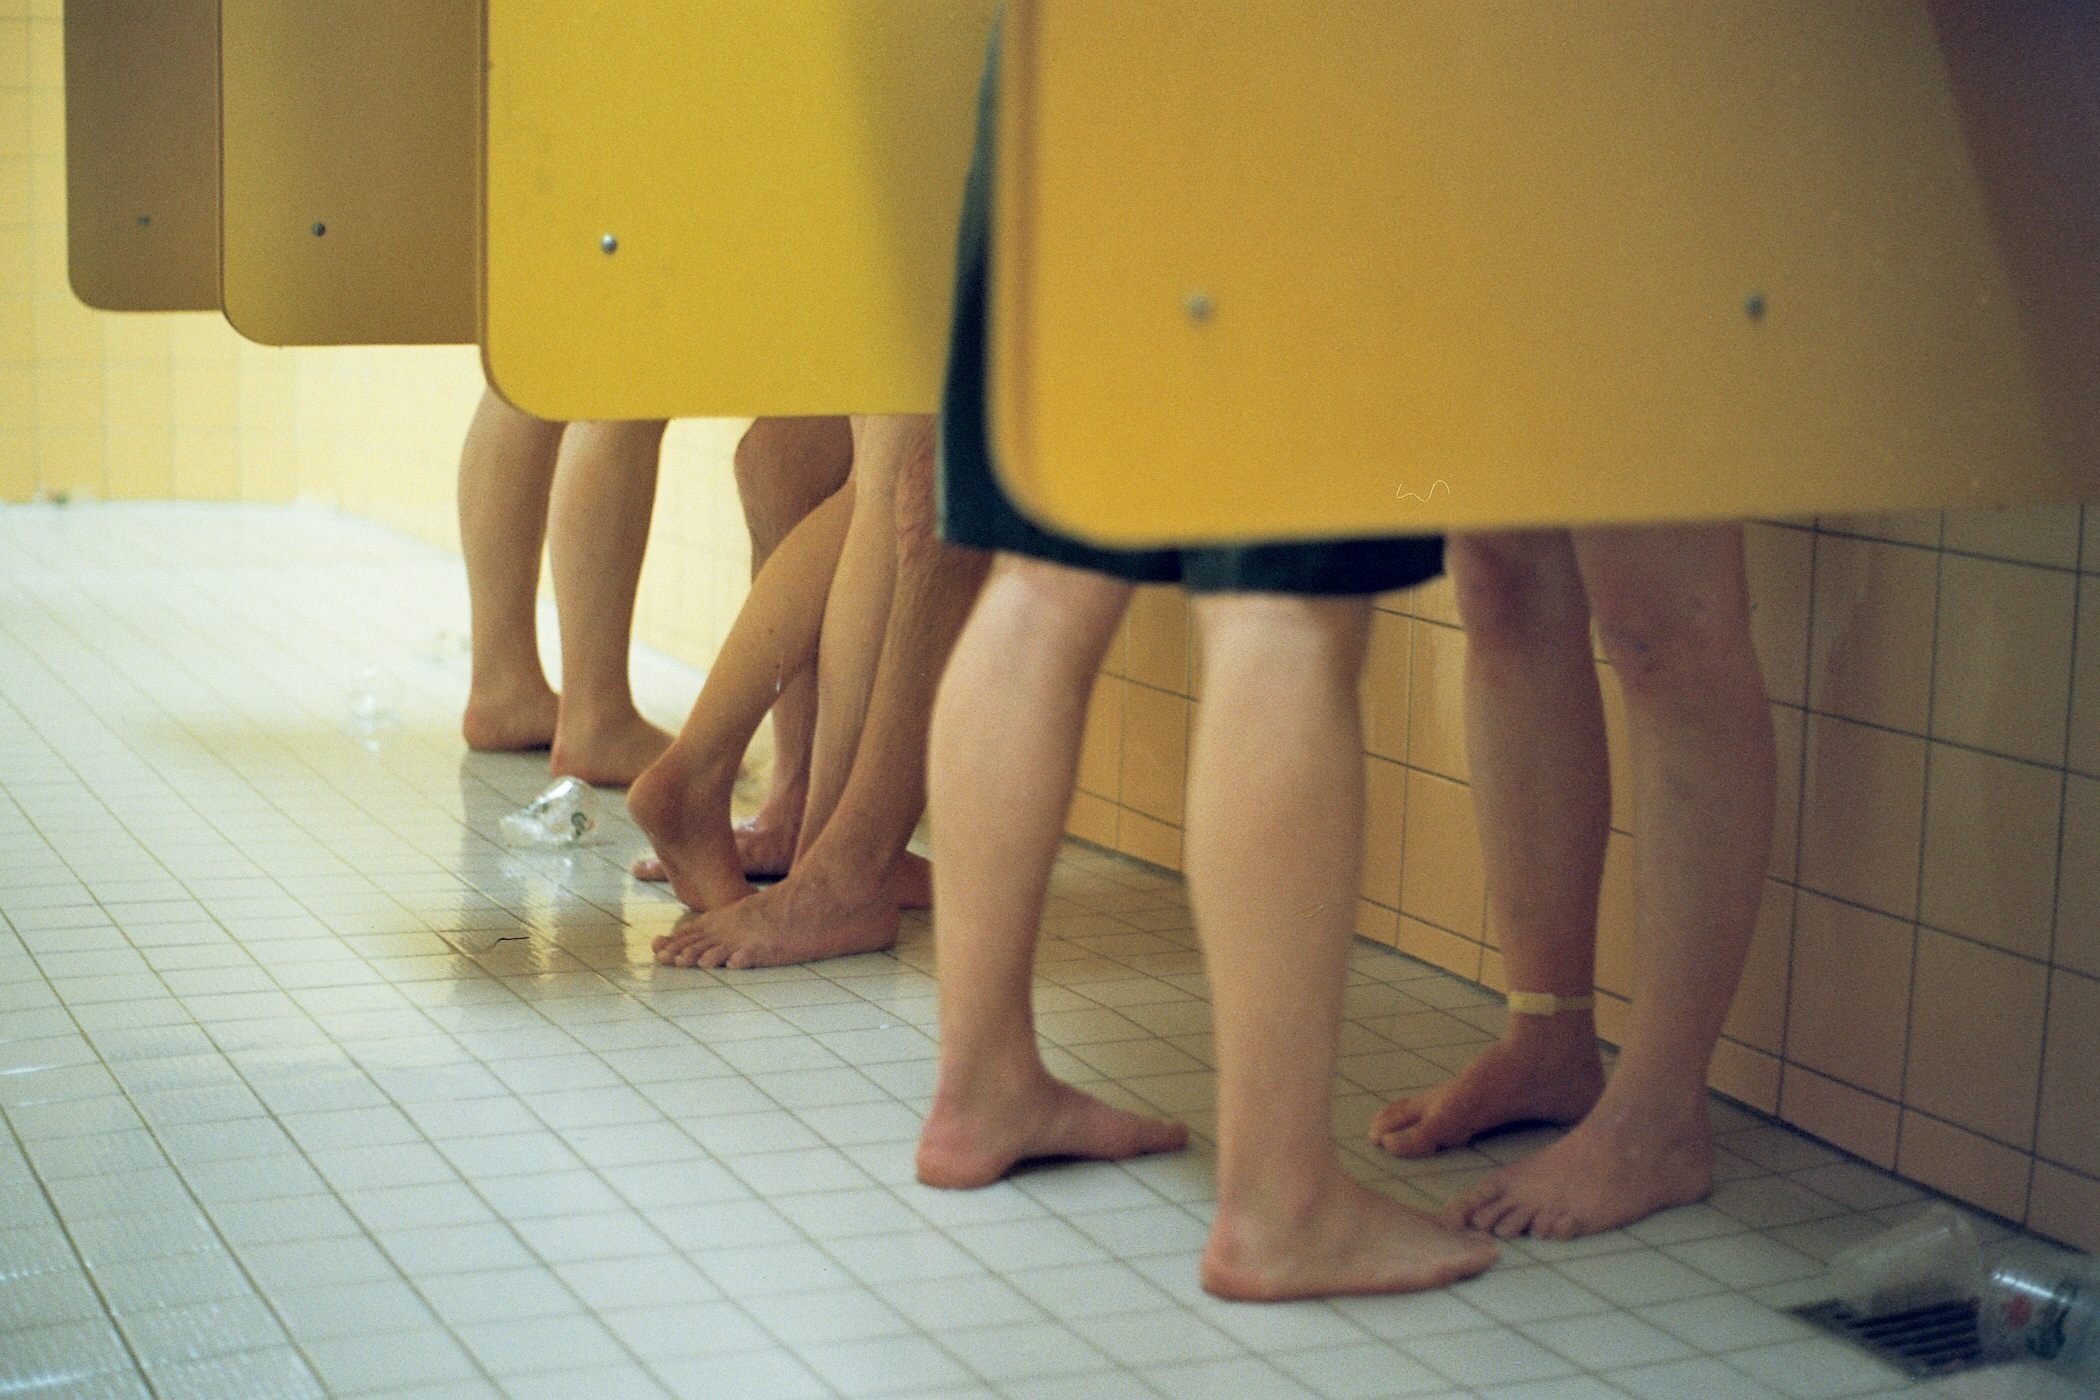 Pies descalzos en ducha pública. | Foto: Wikimedia Commons